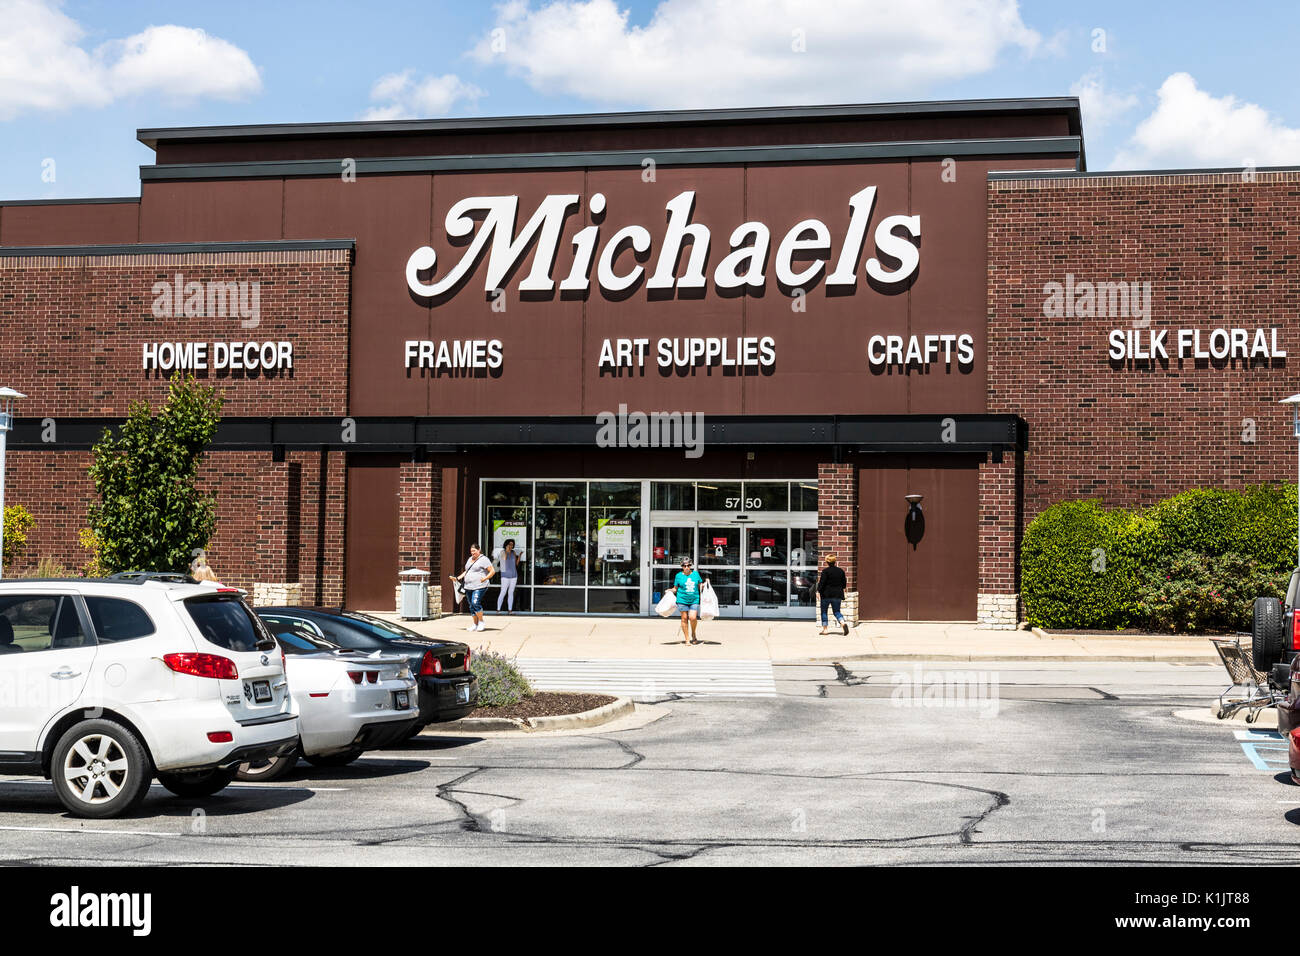 Michaels - The Arts & Crafts Store - Everett, MA 02149